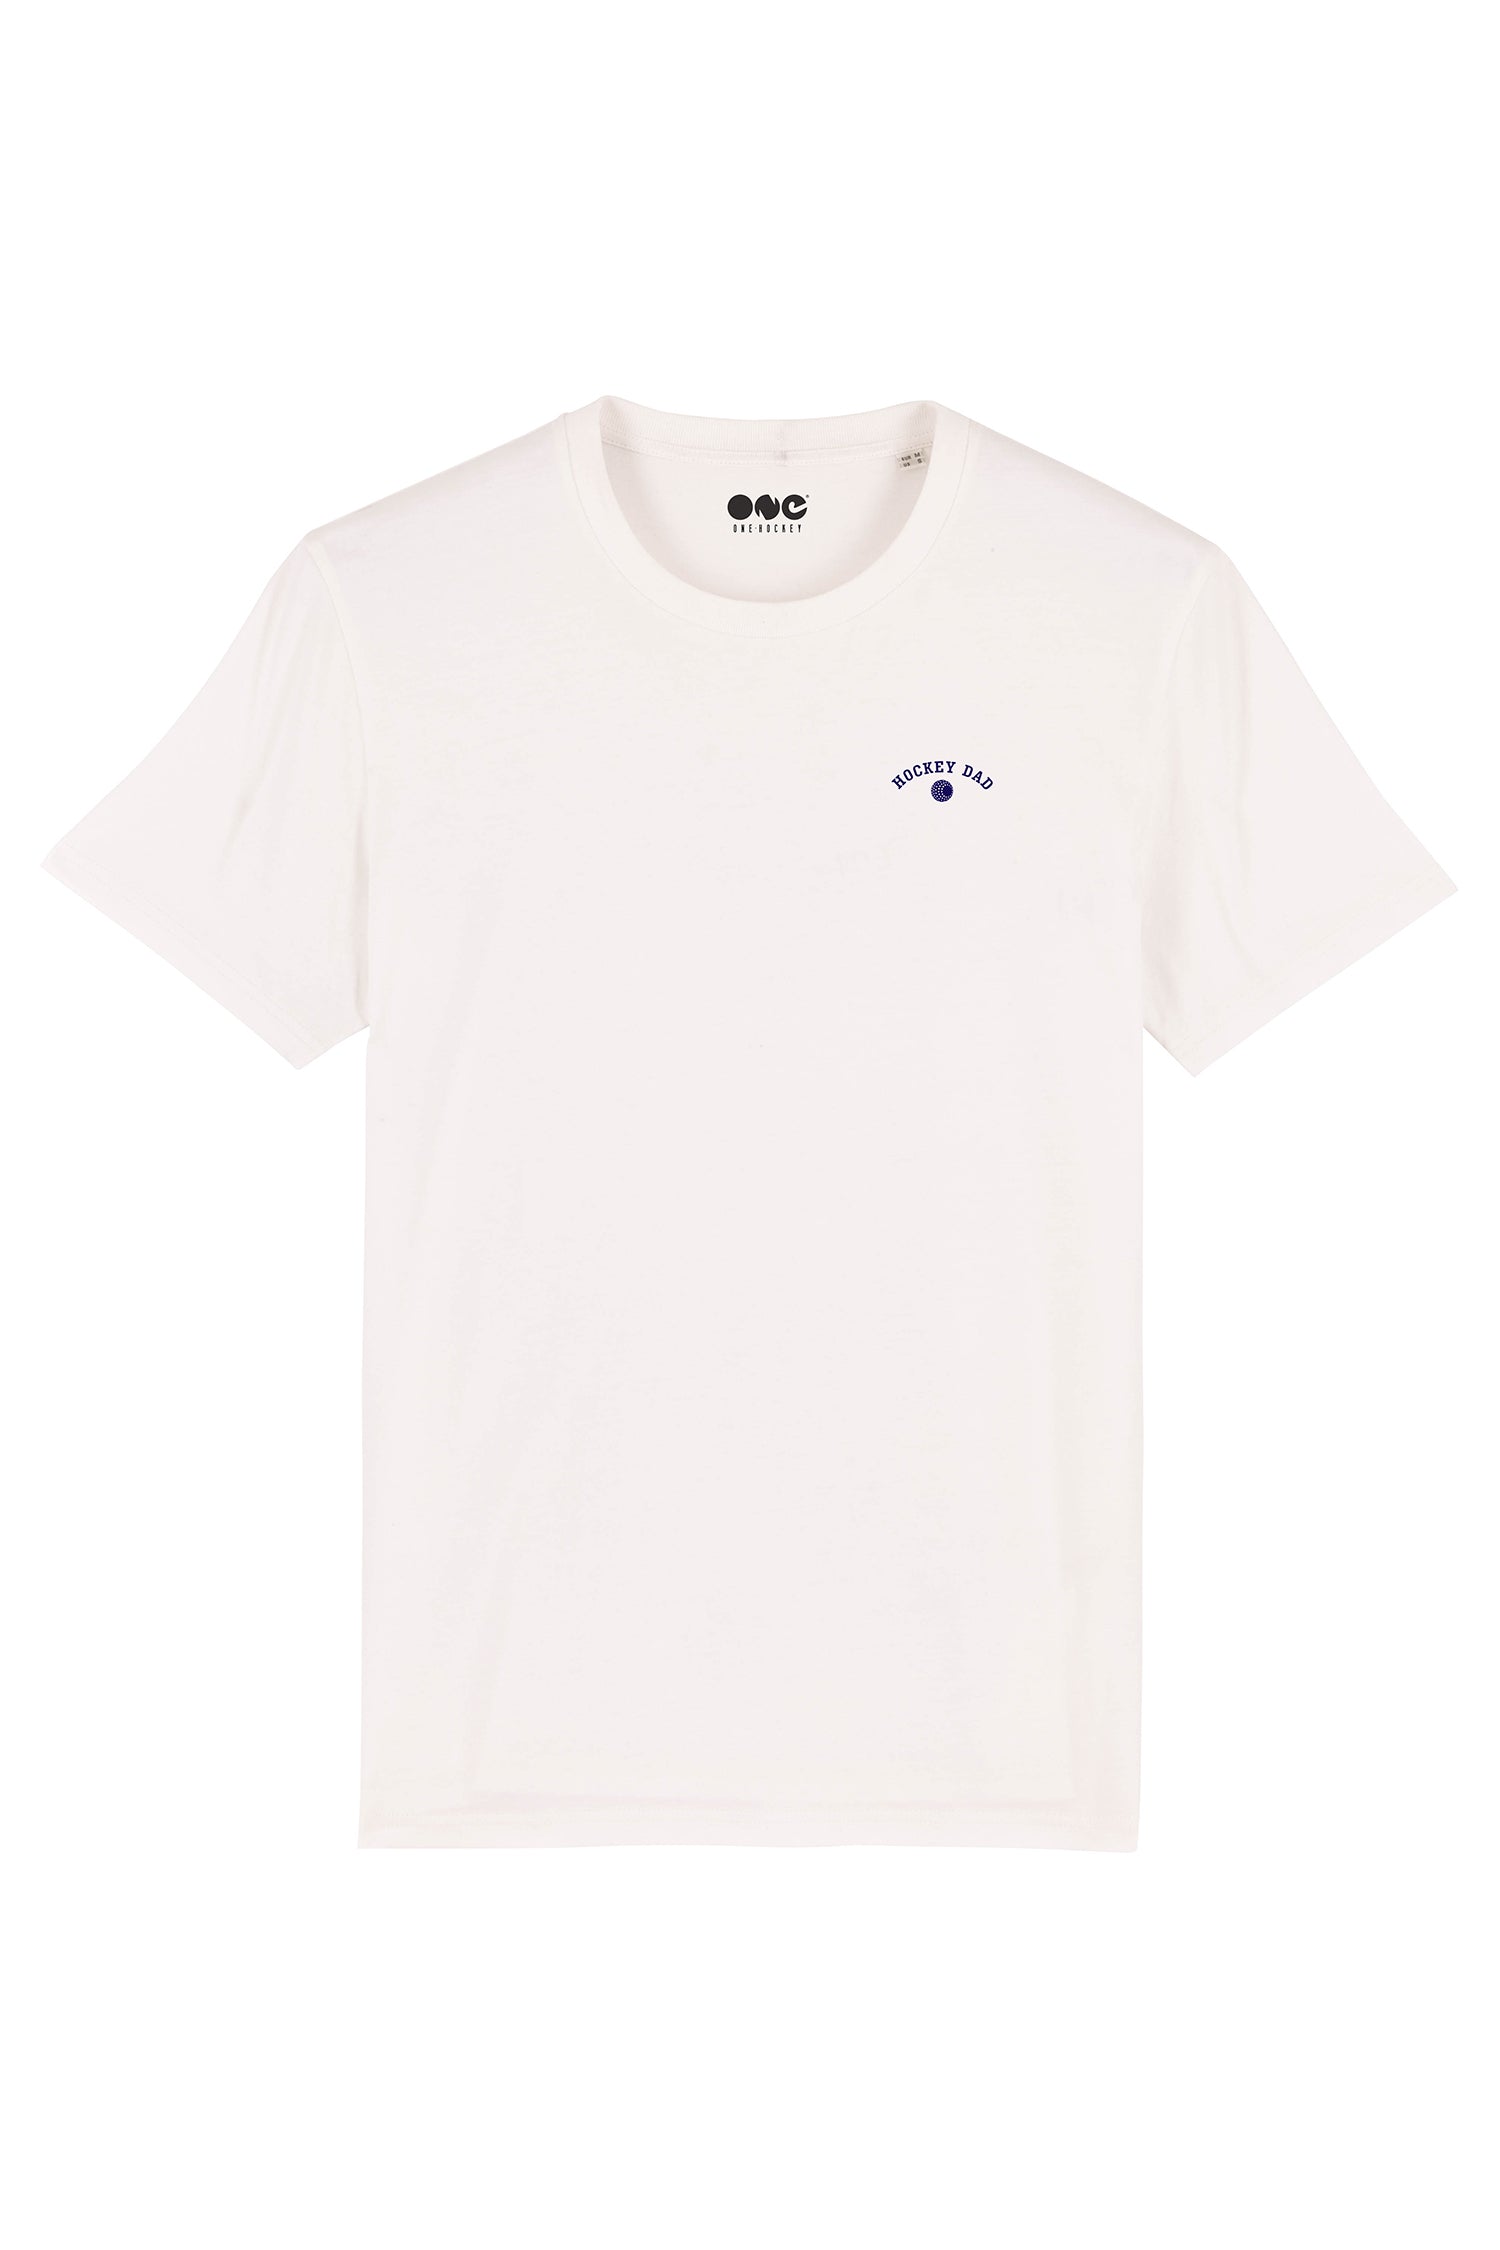 Hockey Dad T-shirt - White